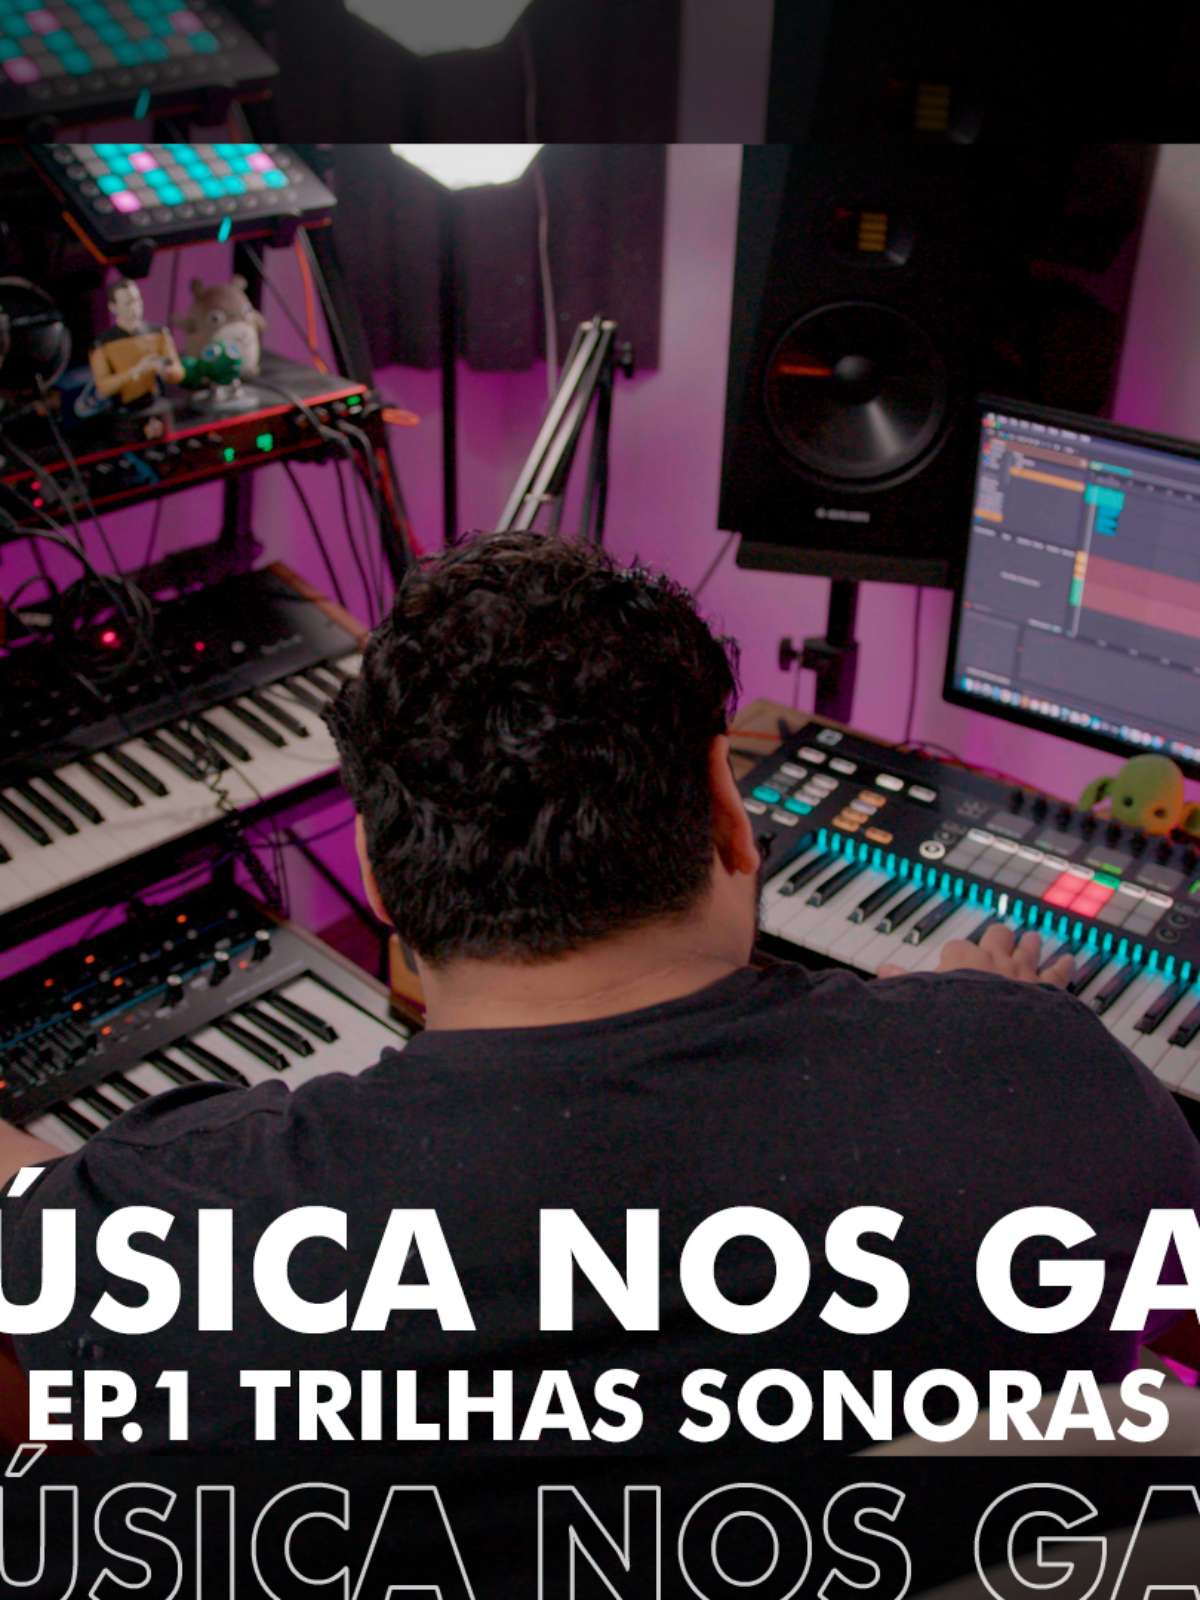 Jogos que têm músicas de artistas brasileiros na trilha sonora - Canaltech